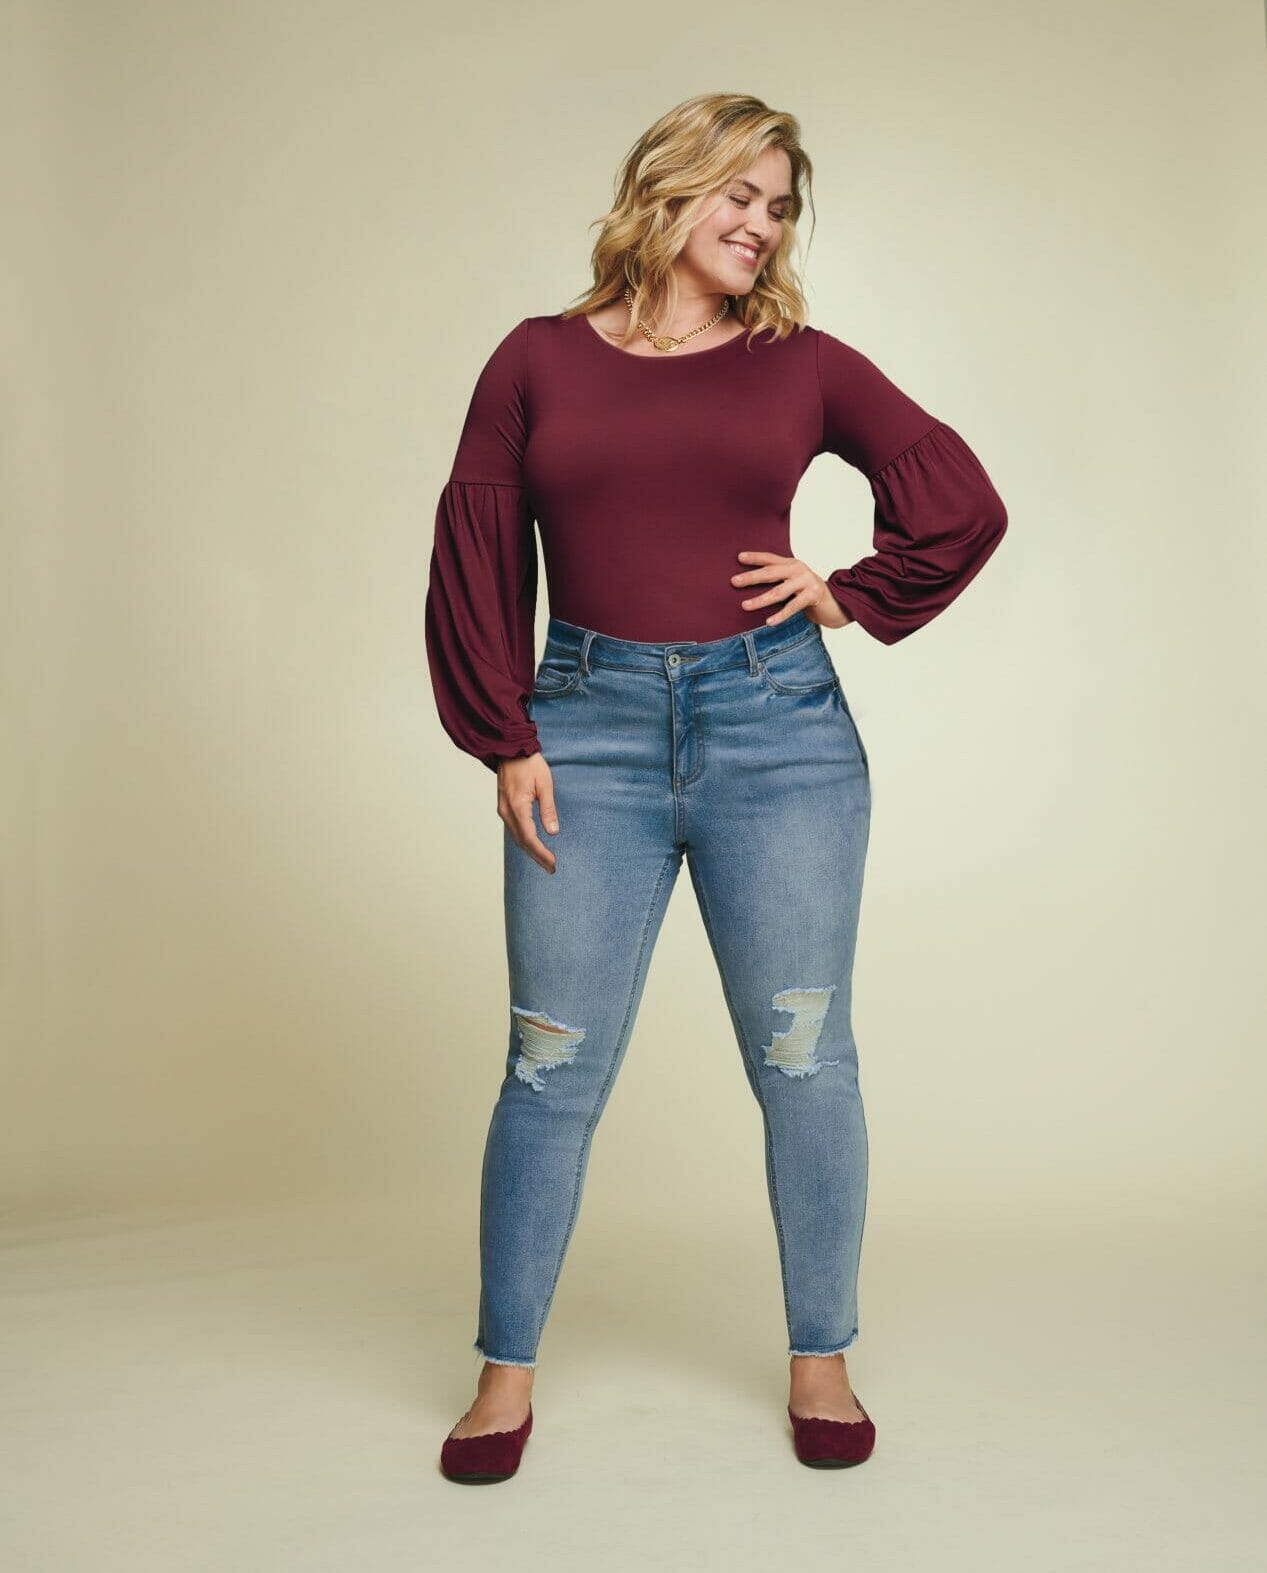 Plus size woman in denim jeans